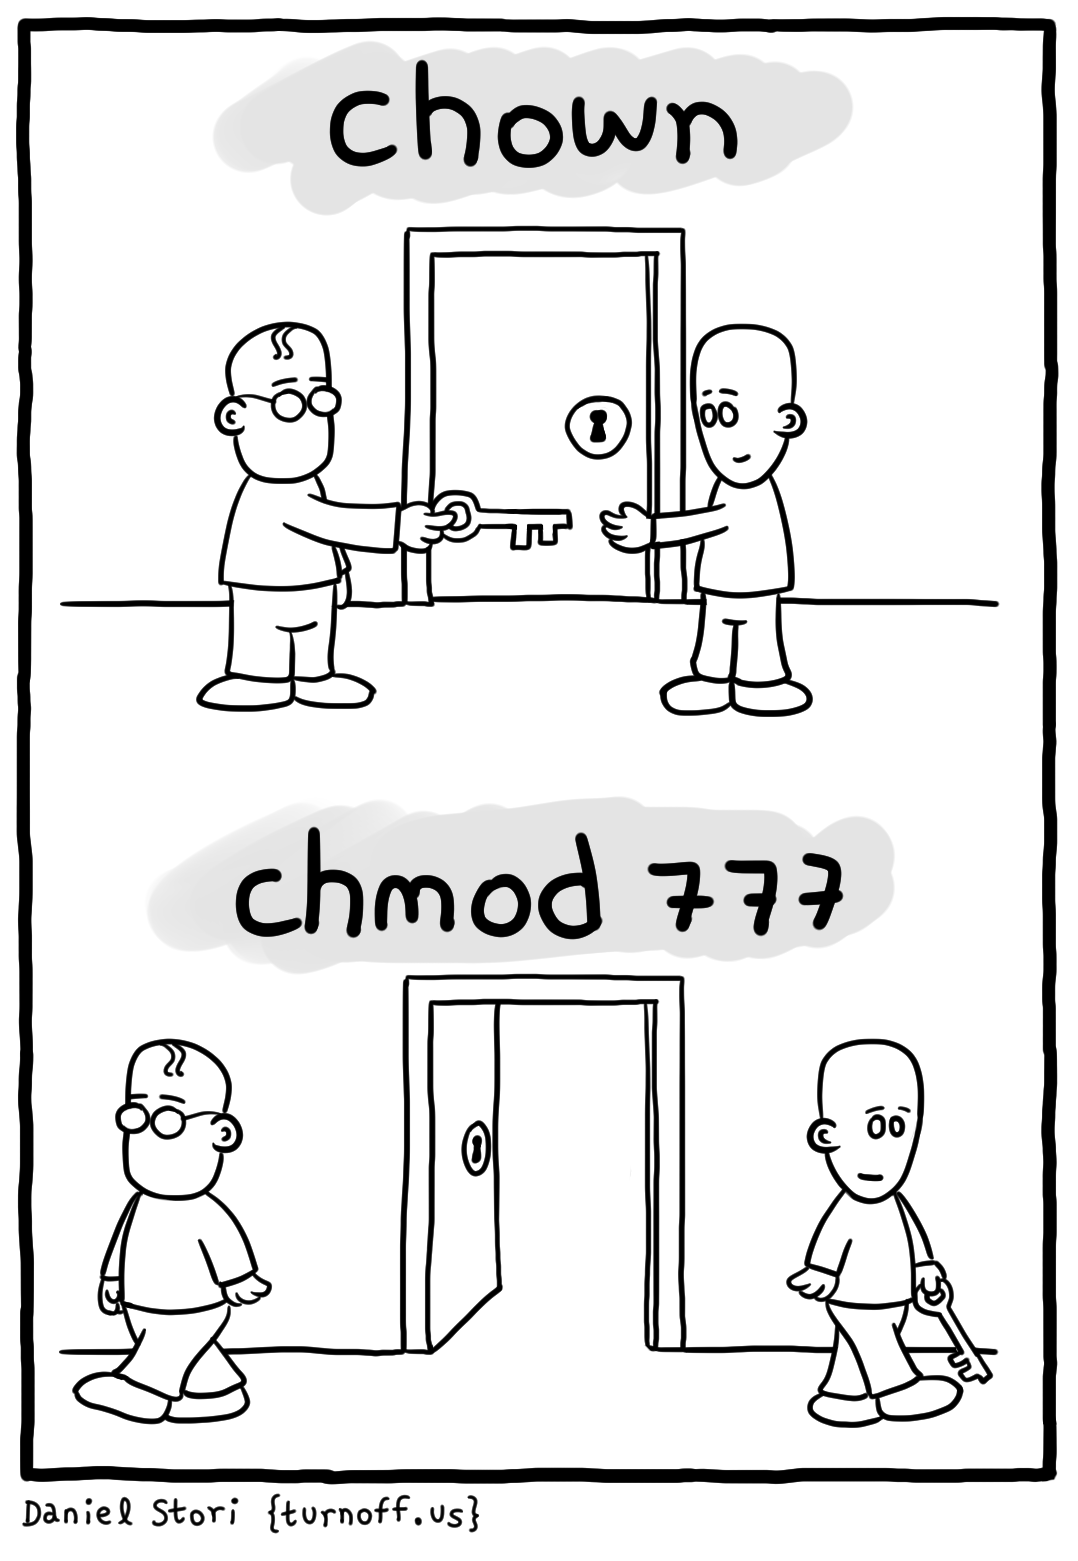 chown - chmod geek comic